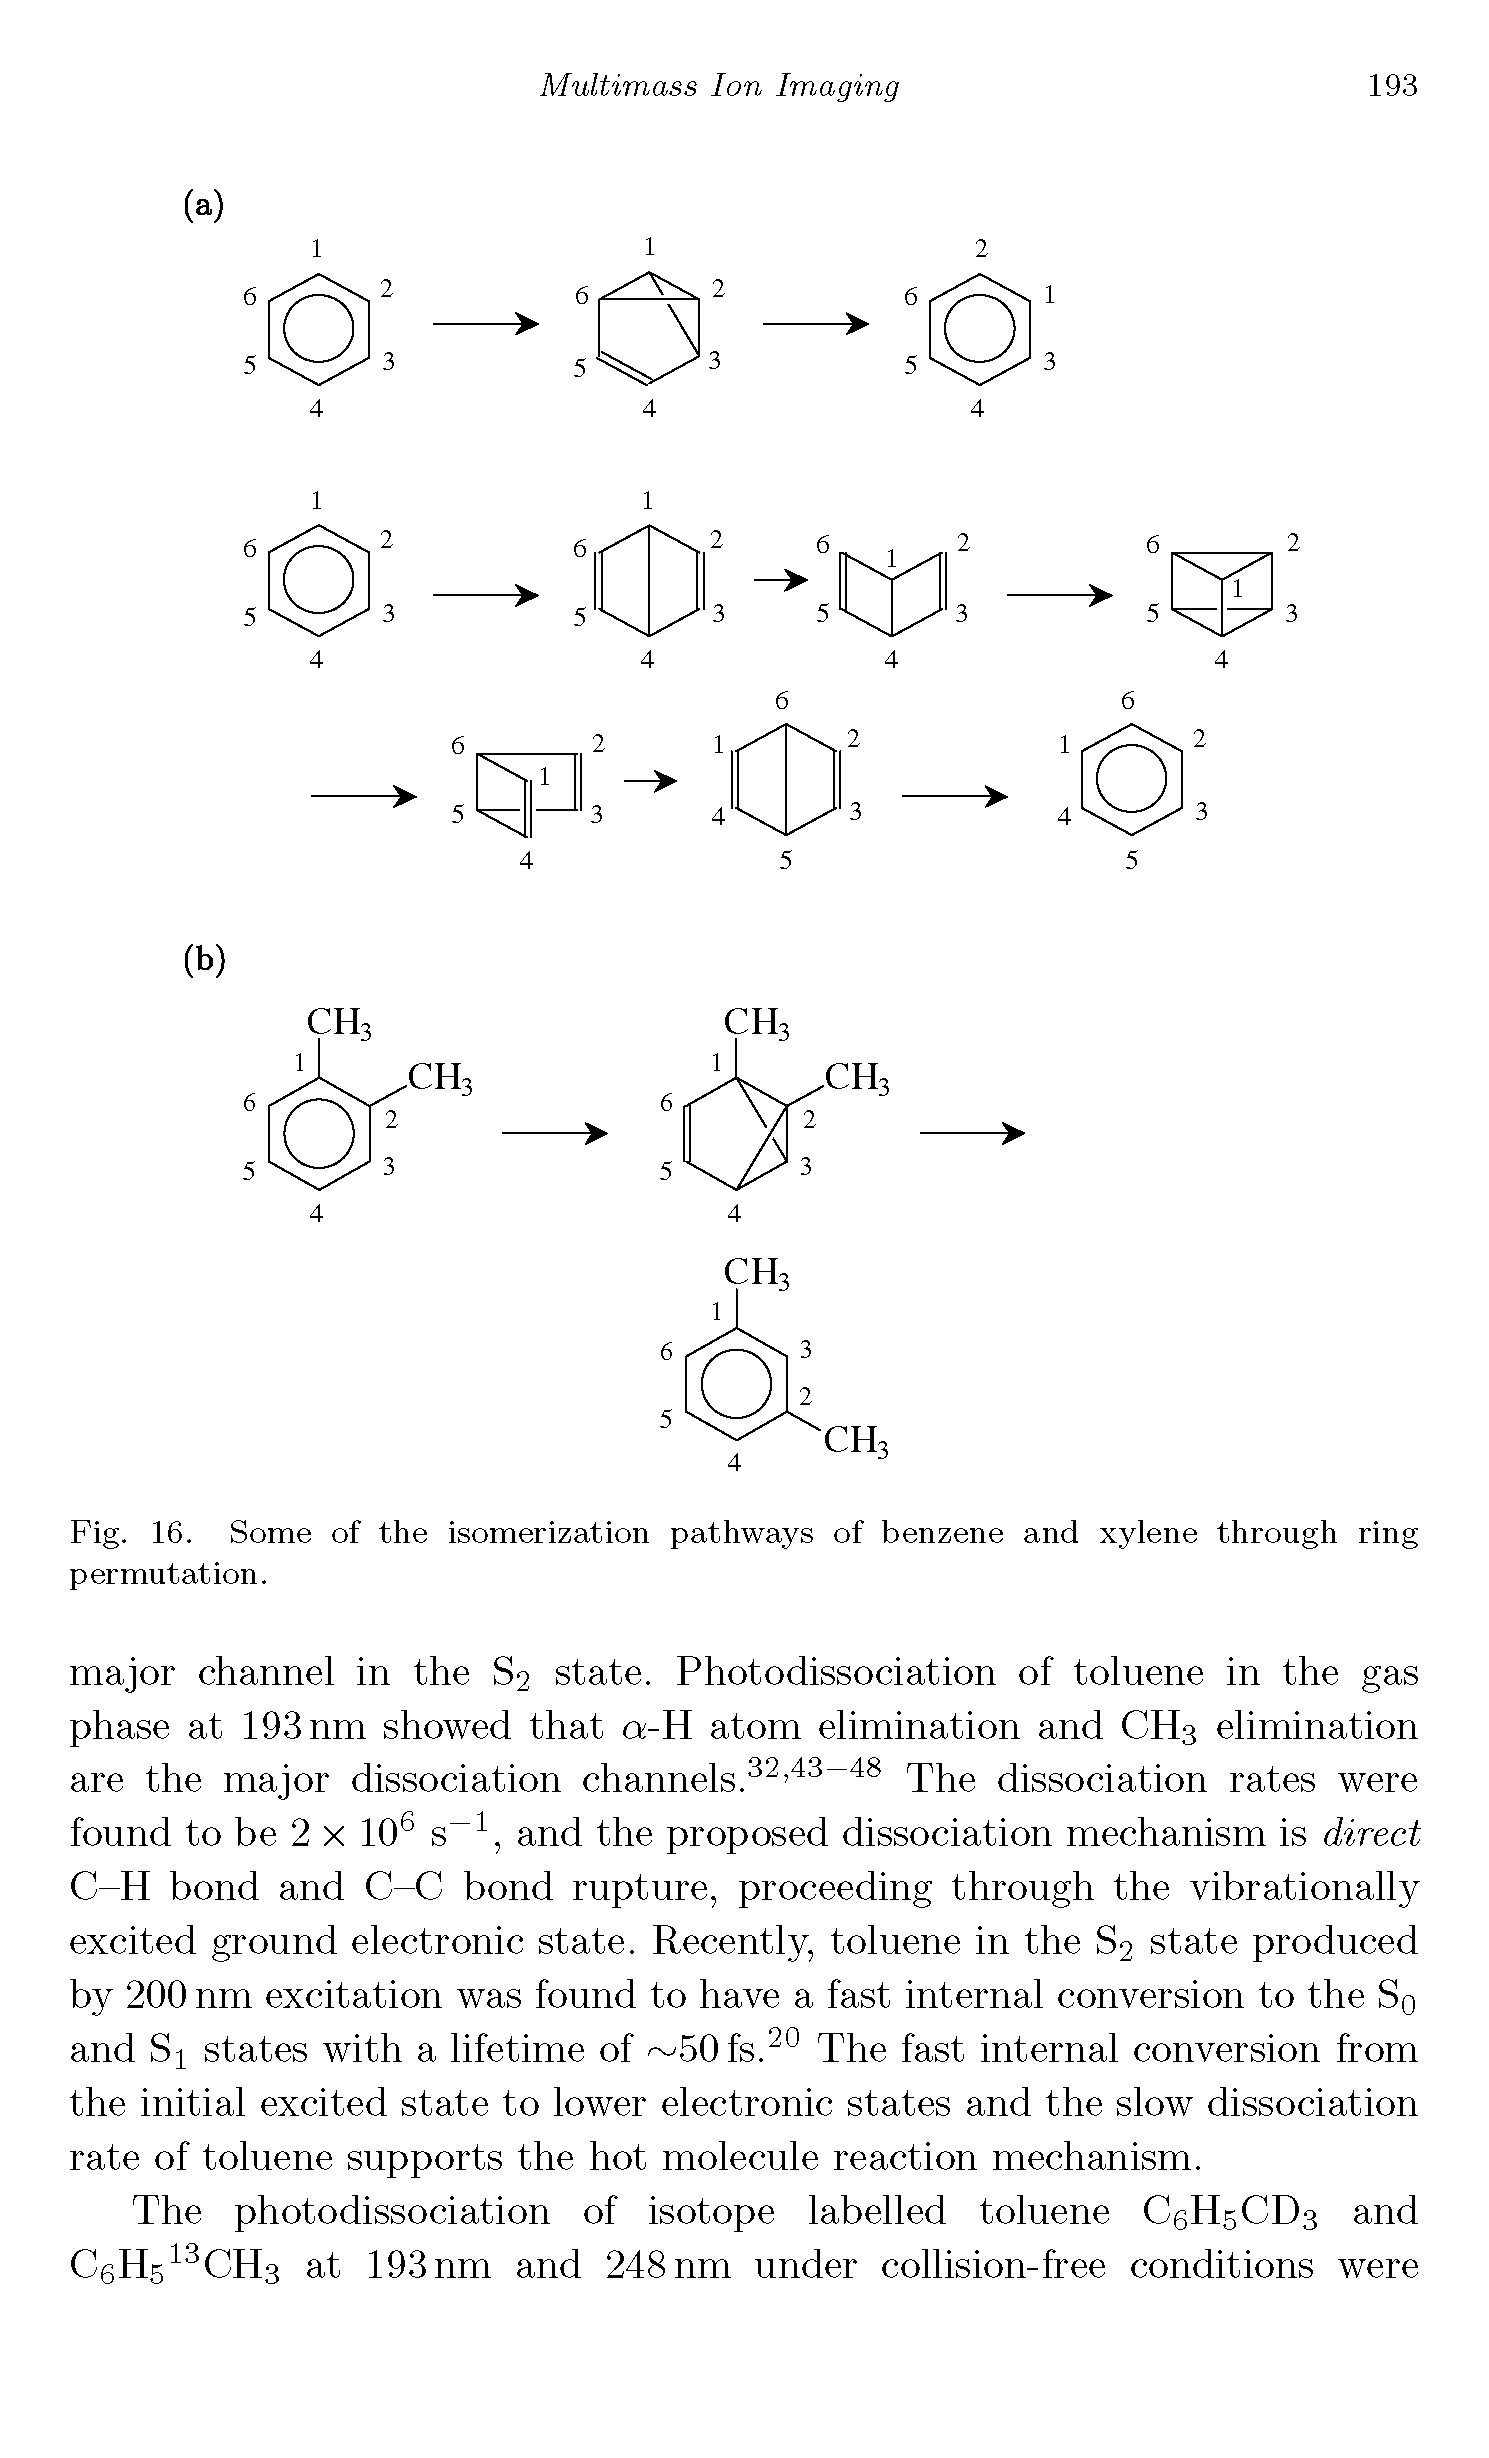 Fig. 16. Some of the isomerization pathways of benzene and xylene through ring permutation.